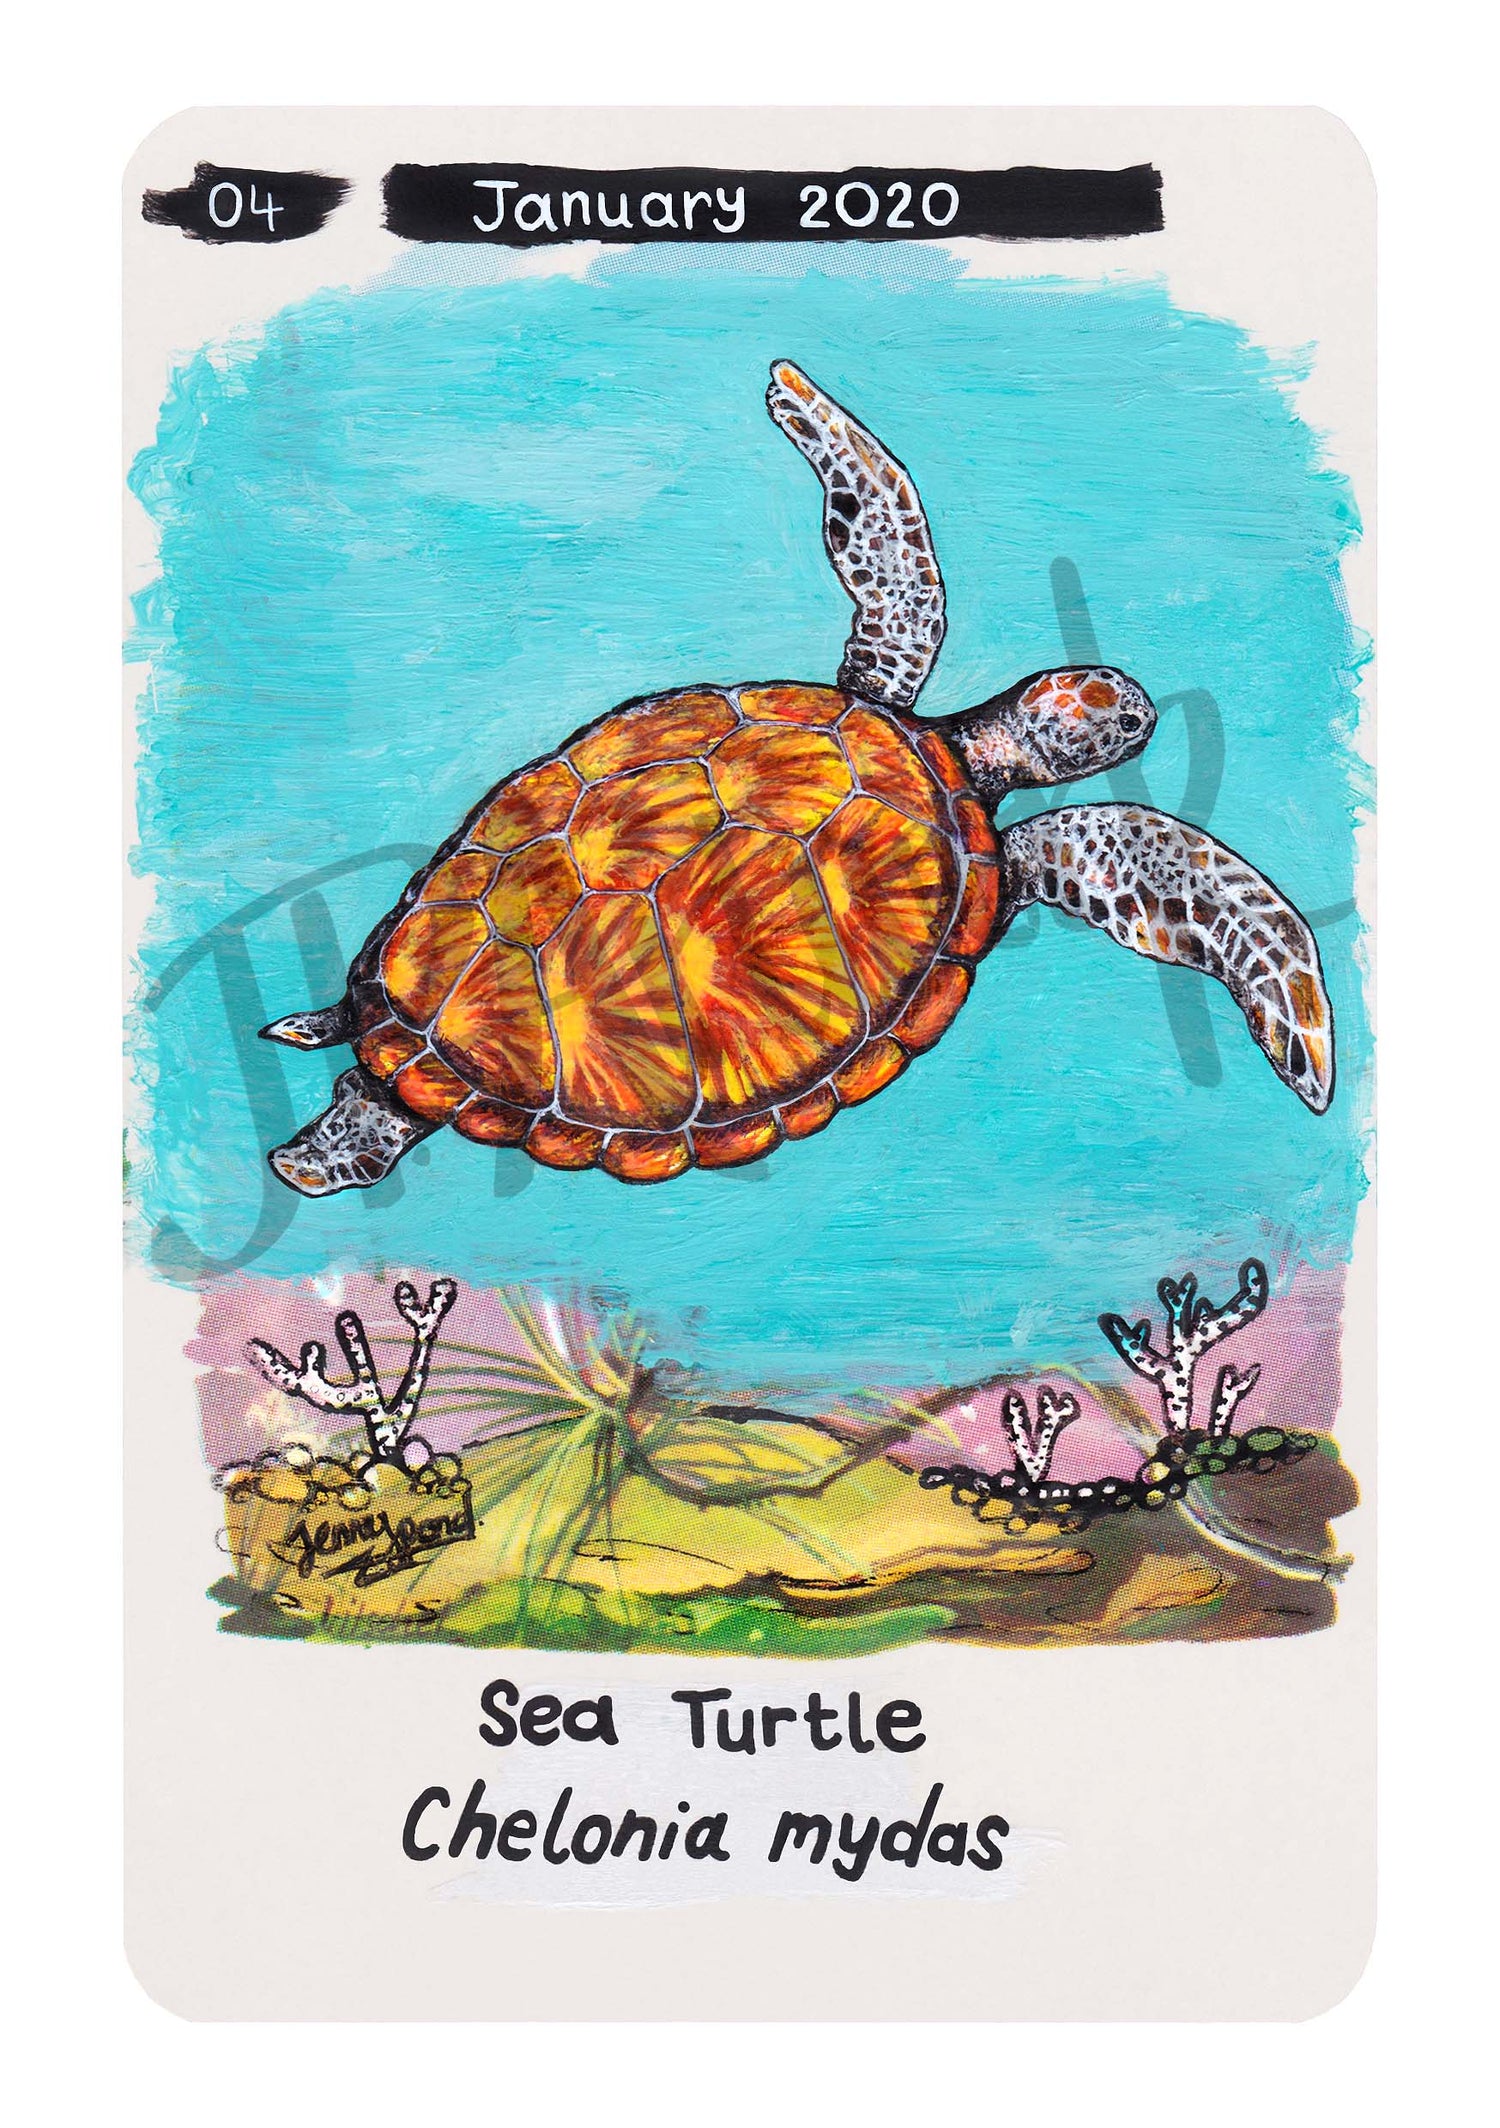 Sea Turtle Limited Edition A5 Hemp Paper Print by Jenny Pond, JPArtwork